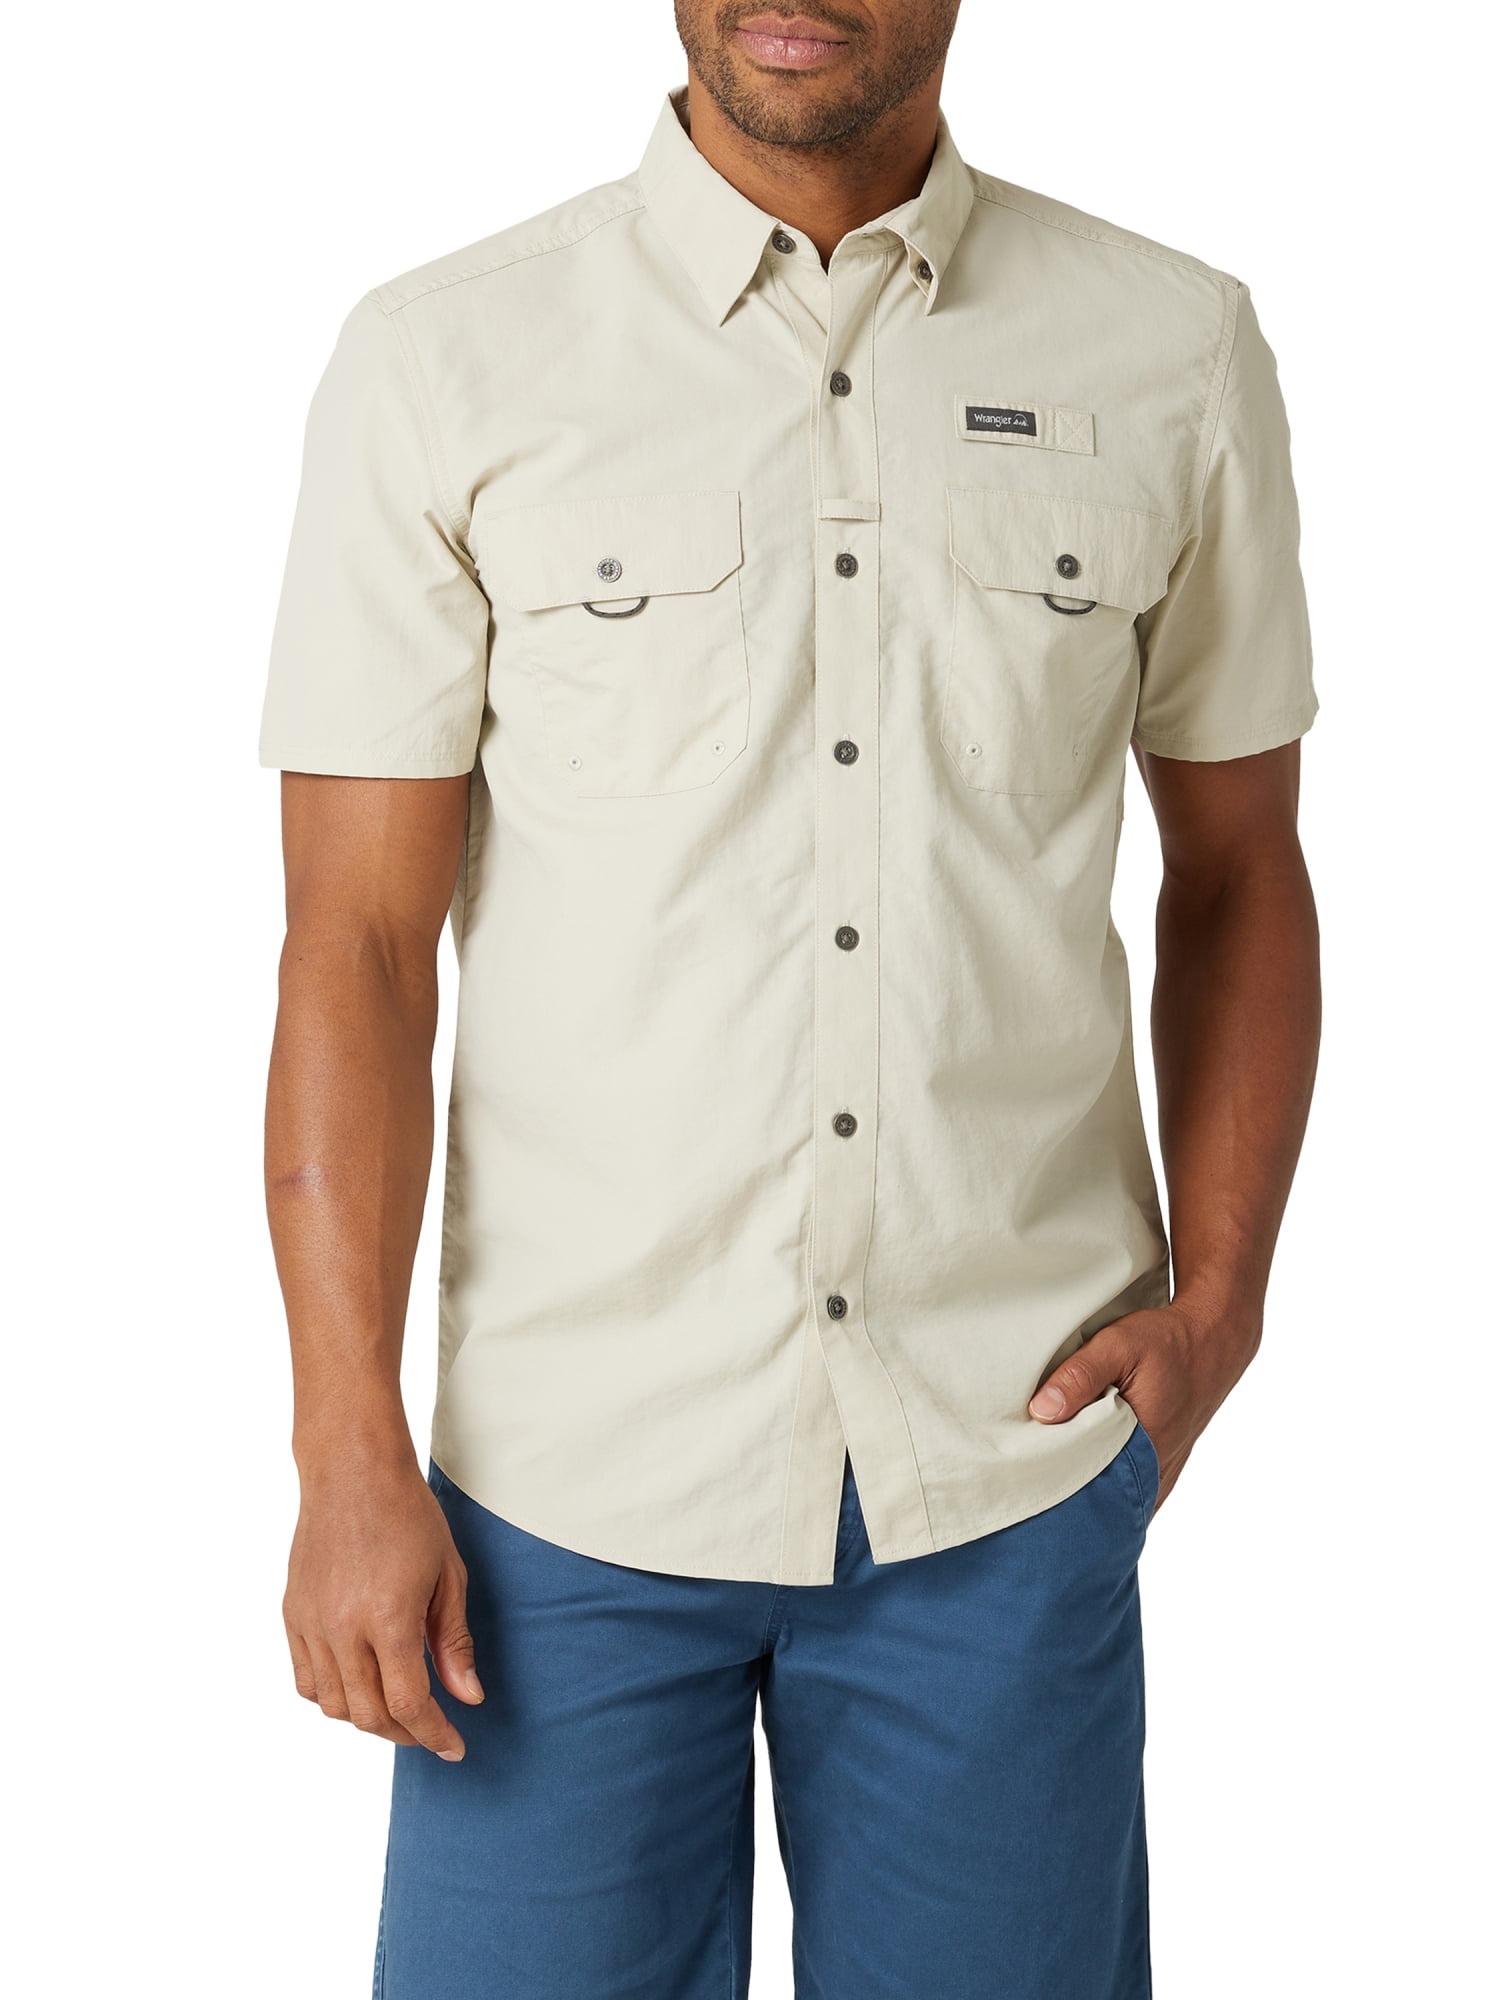 US Air Force Global Mens Fashion Short Sleeve Shirt 